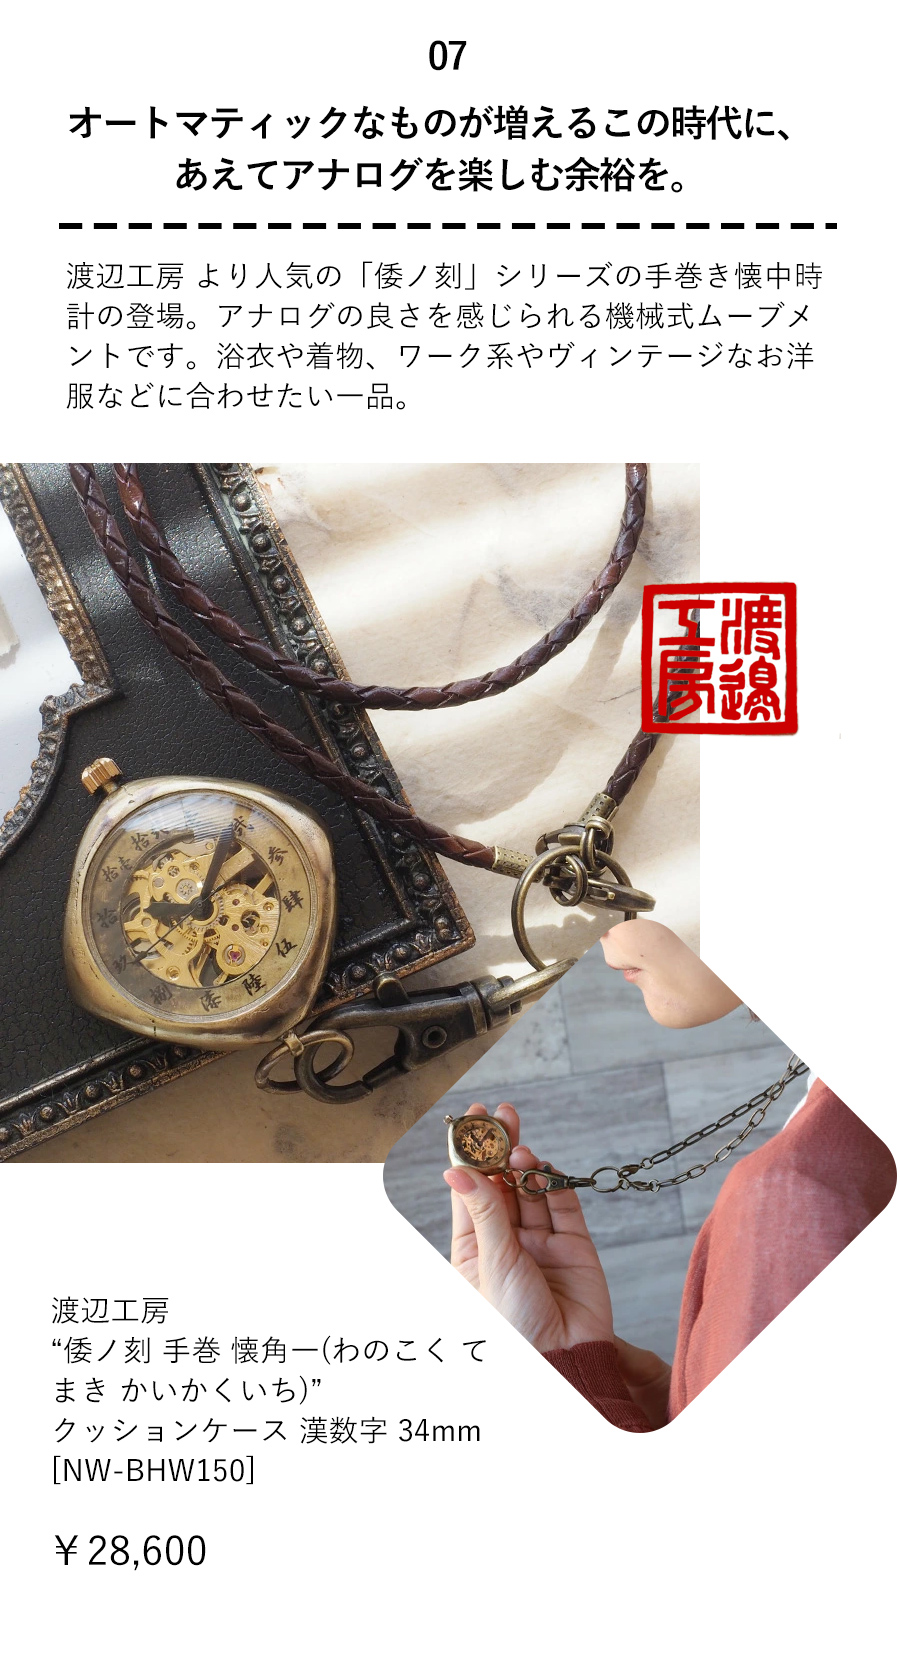 Watanabe Kobo Handmade Pocket Watch Mechanical Hand-Wound Pocket Watch “Wa-no-Koku Hand-Wound Kaikakuichi”